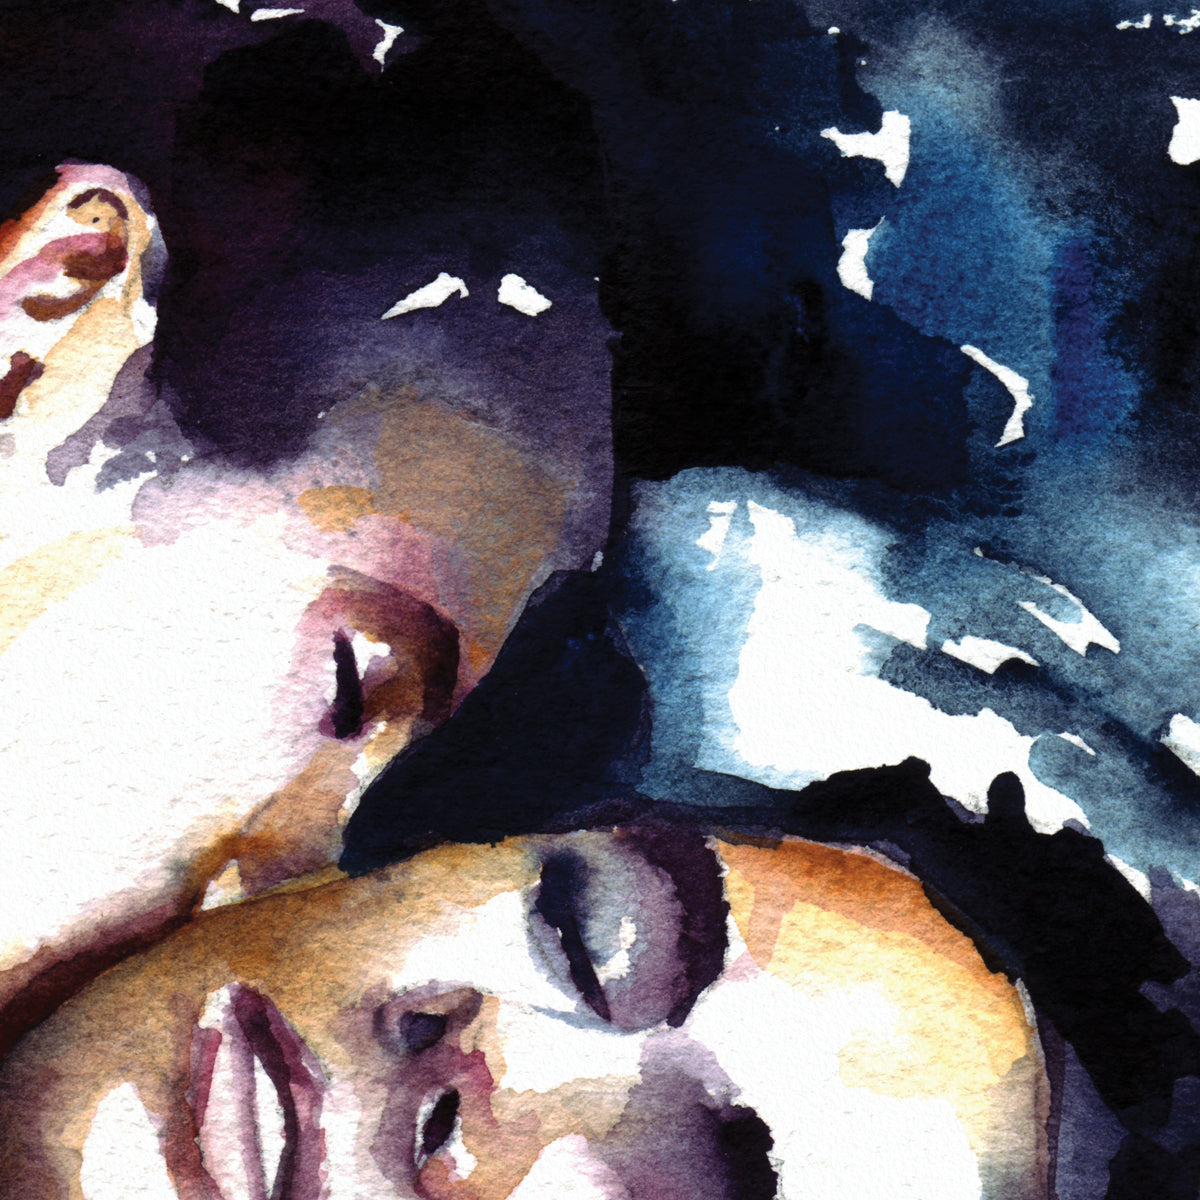 Night's Desire: Passionate Pleasure Between Two Men - Giclee Art Print